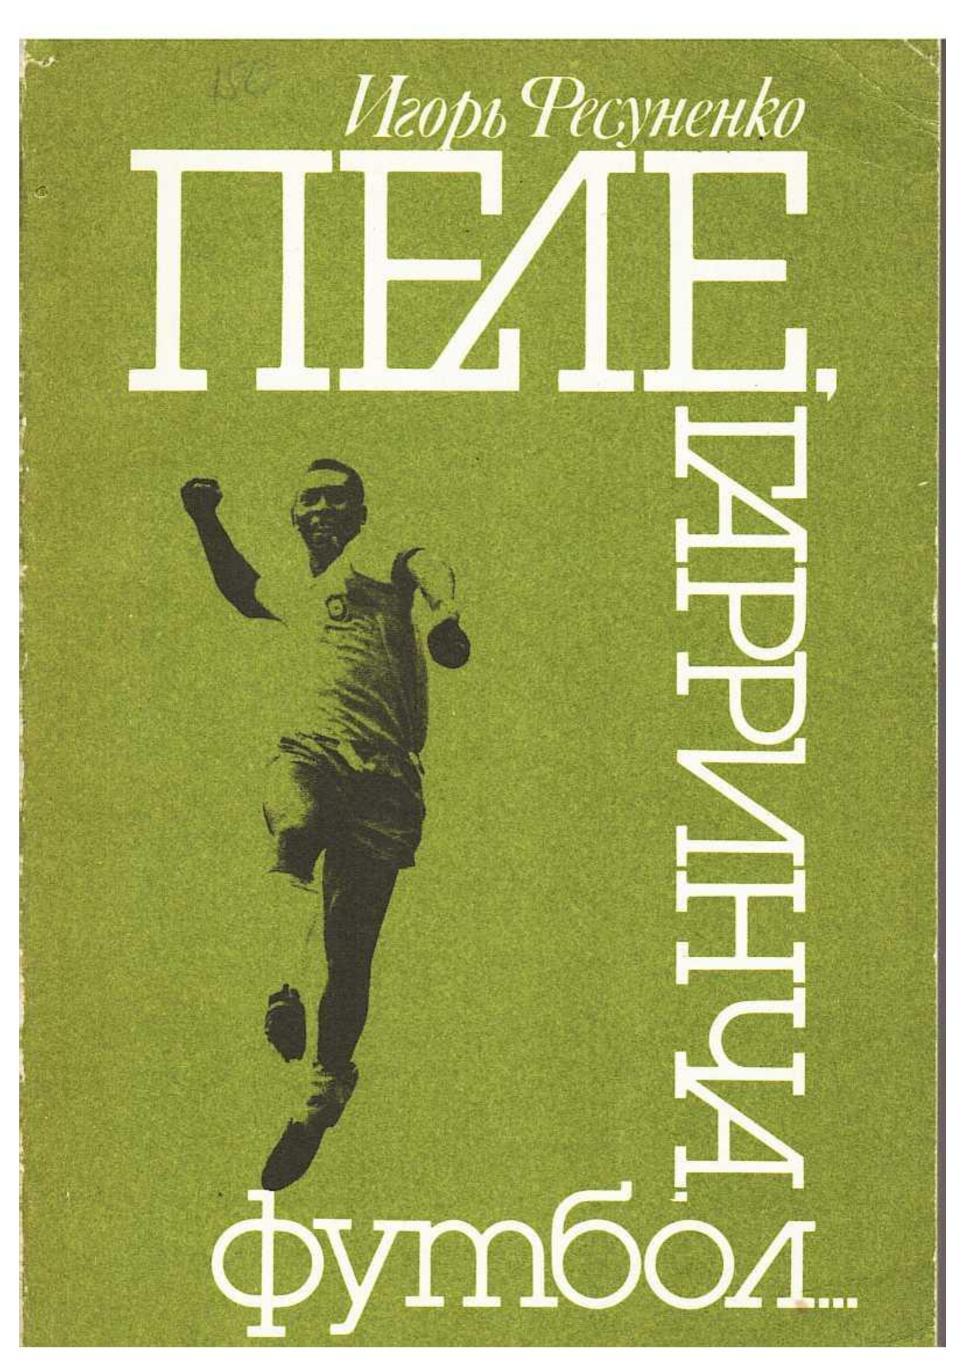 Игорь Фесуненко. Пеле, Гарринча, футбол. Москва, 1990.